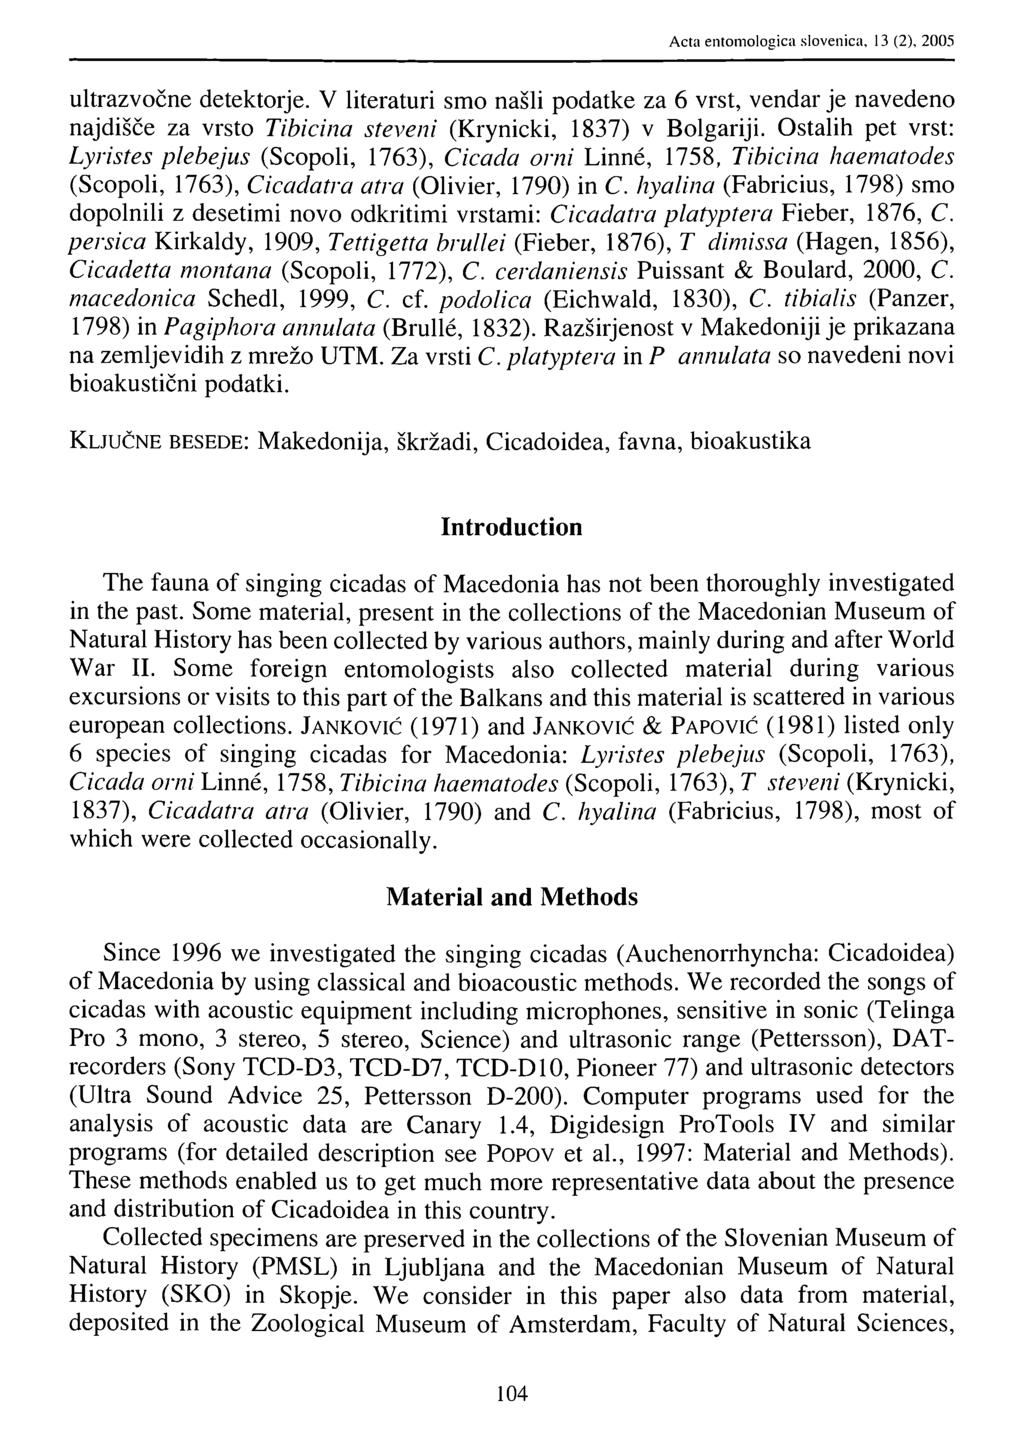 Slovenian Entomological Society, download unter www.biologiezentrum.at Acta entomologica slovenica, 13 (2), 2005 ultrazvočne detektorje.